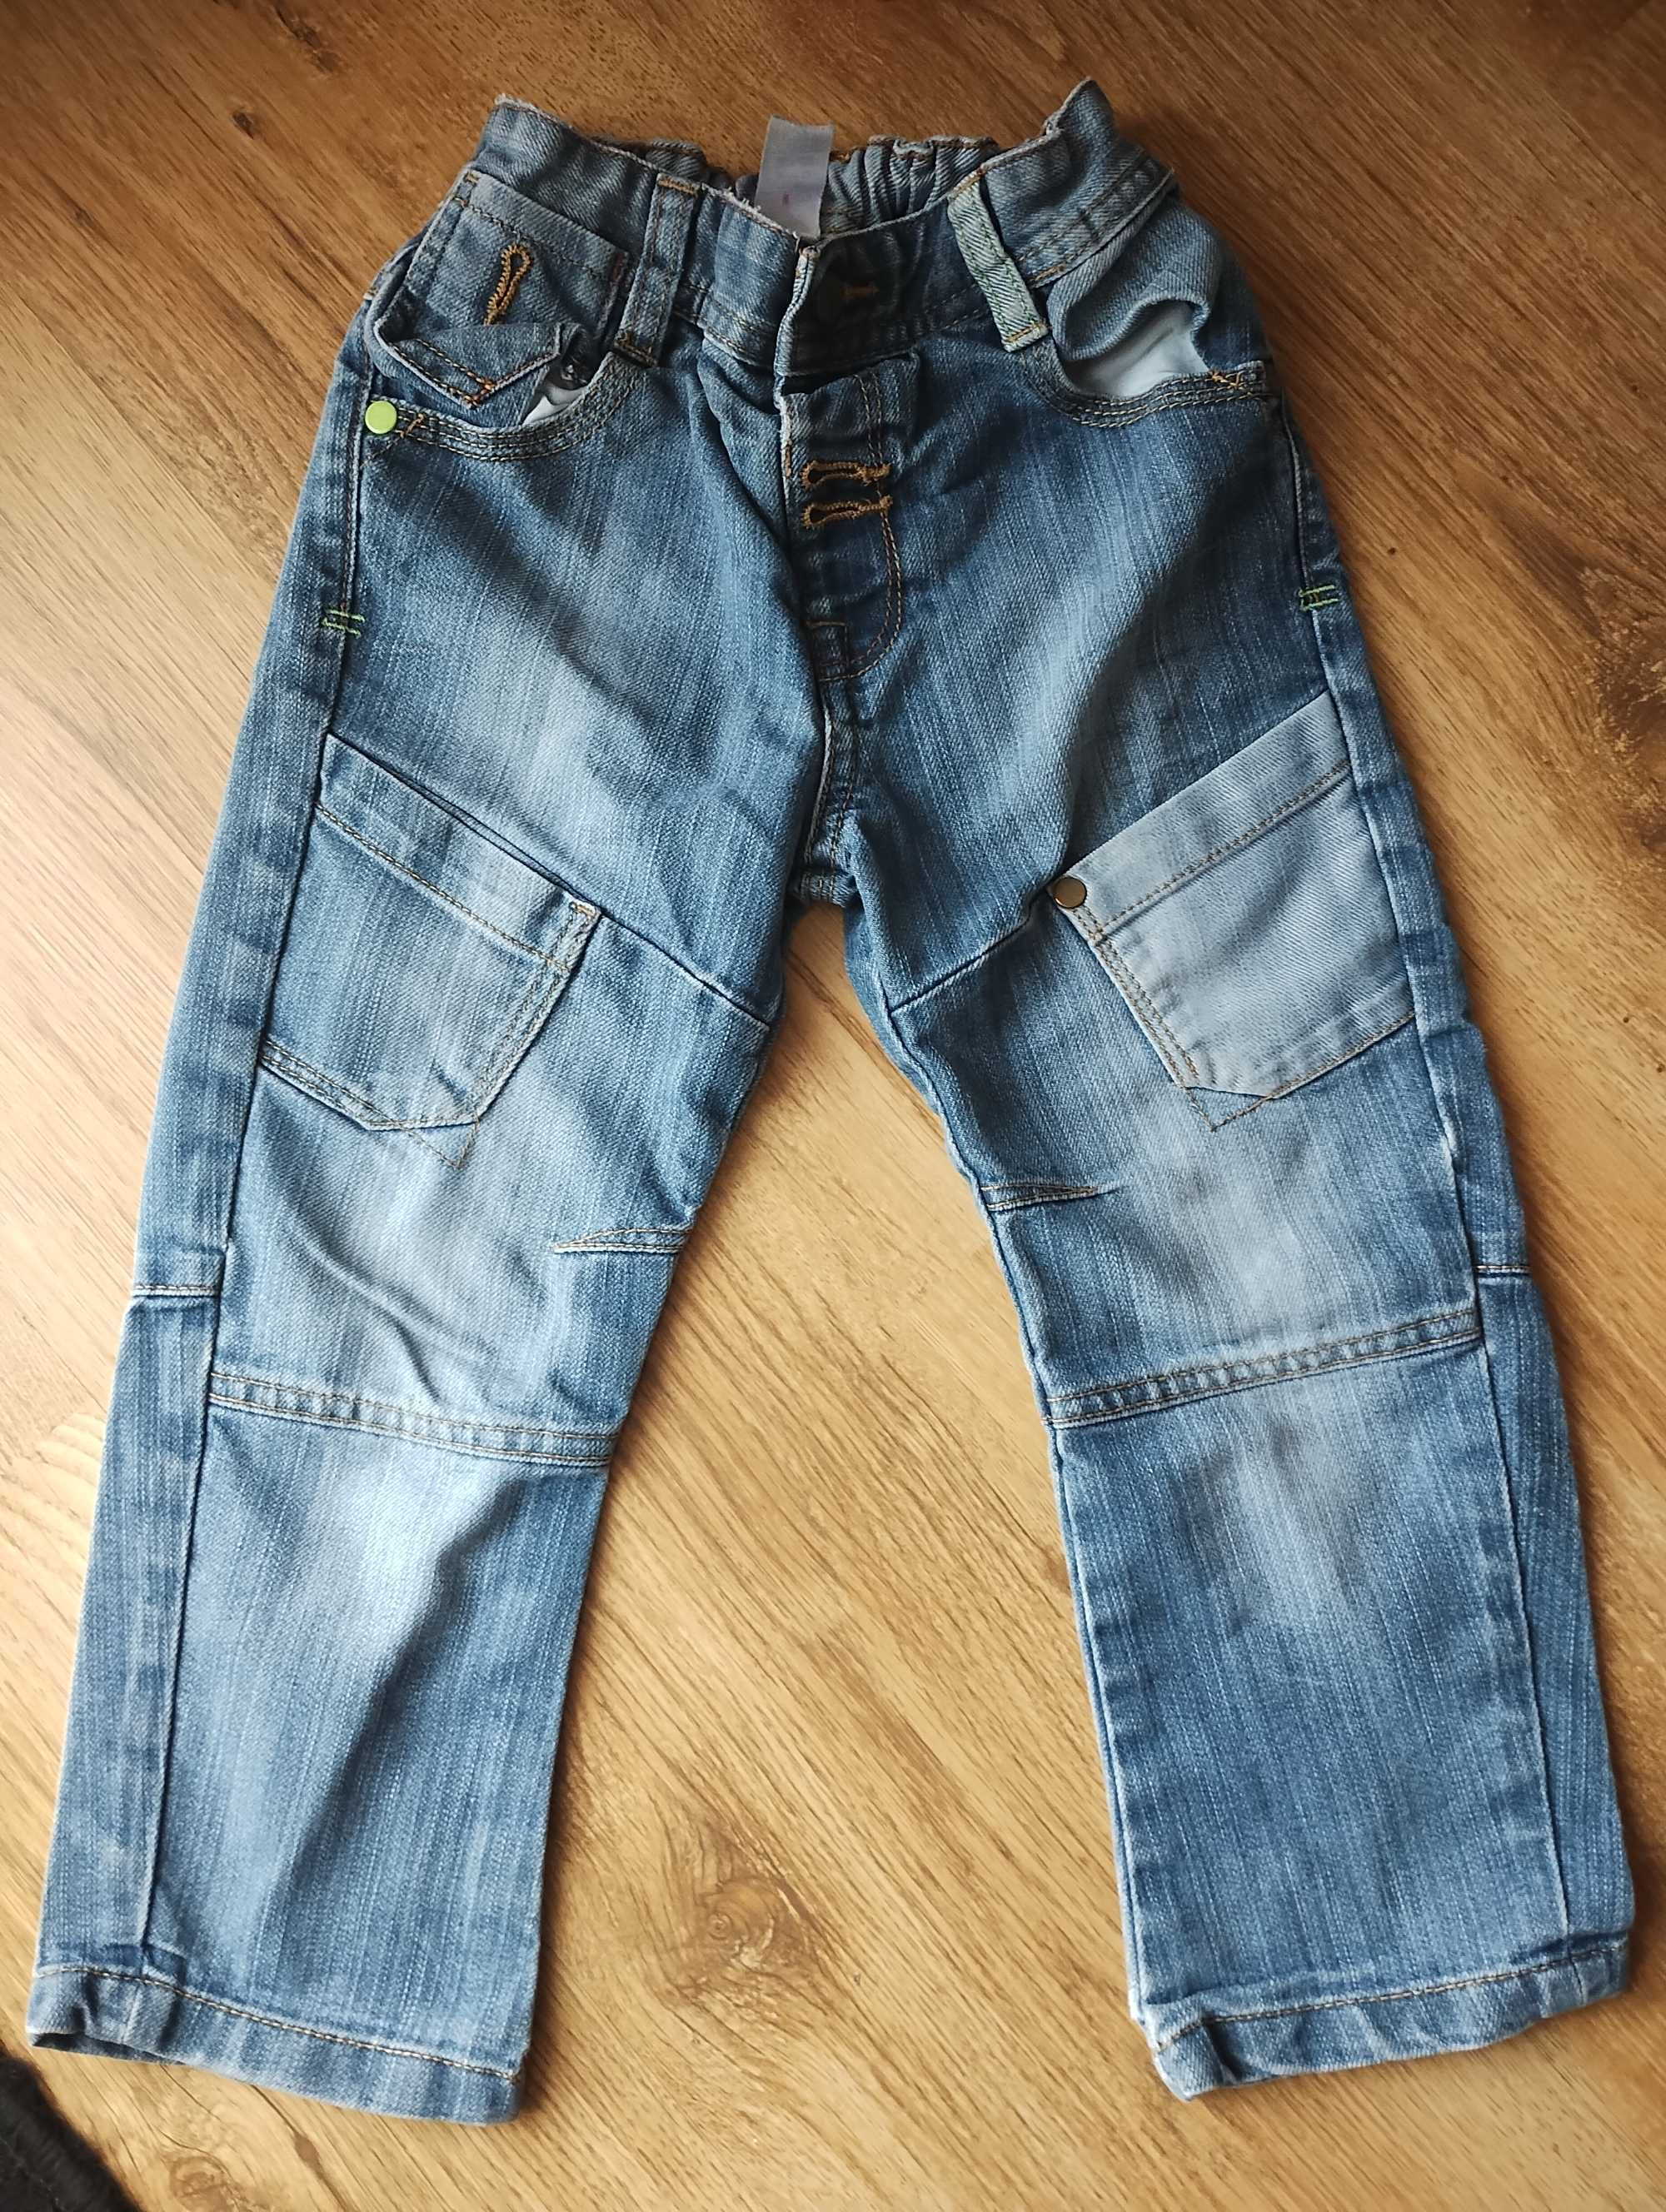 Spodnie jeans r 98/104 dla chlopca